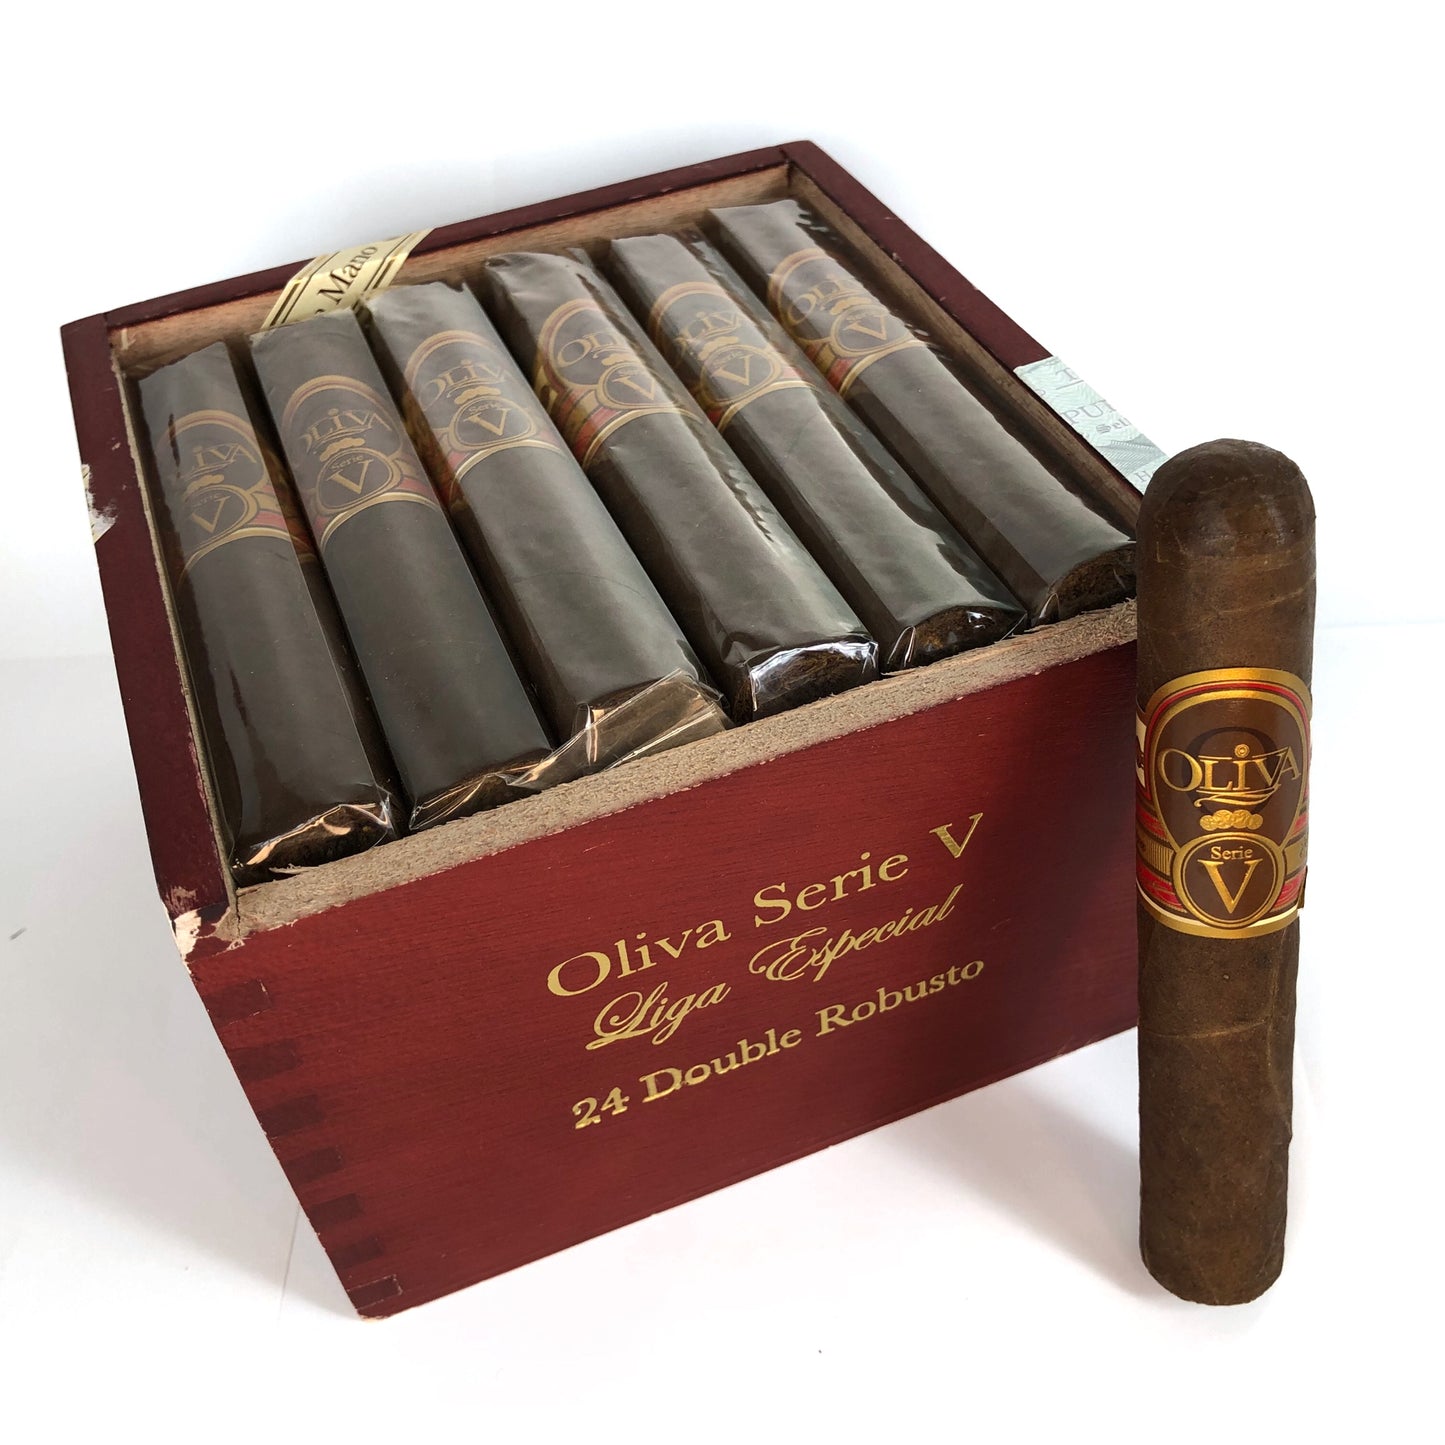 Oliva Serie V Double Robusto Box of 24 cigars